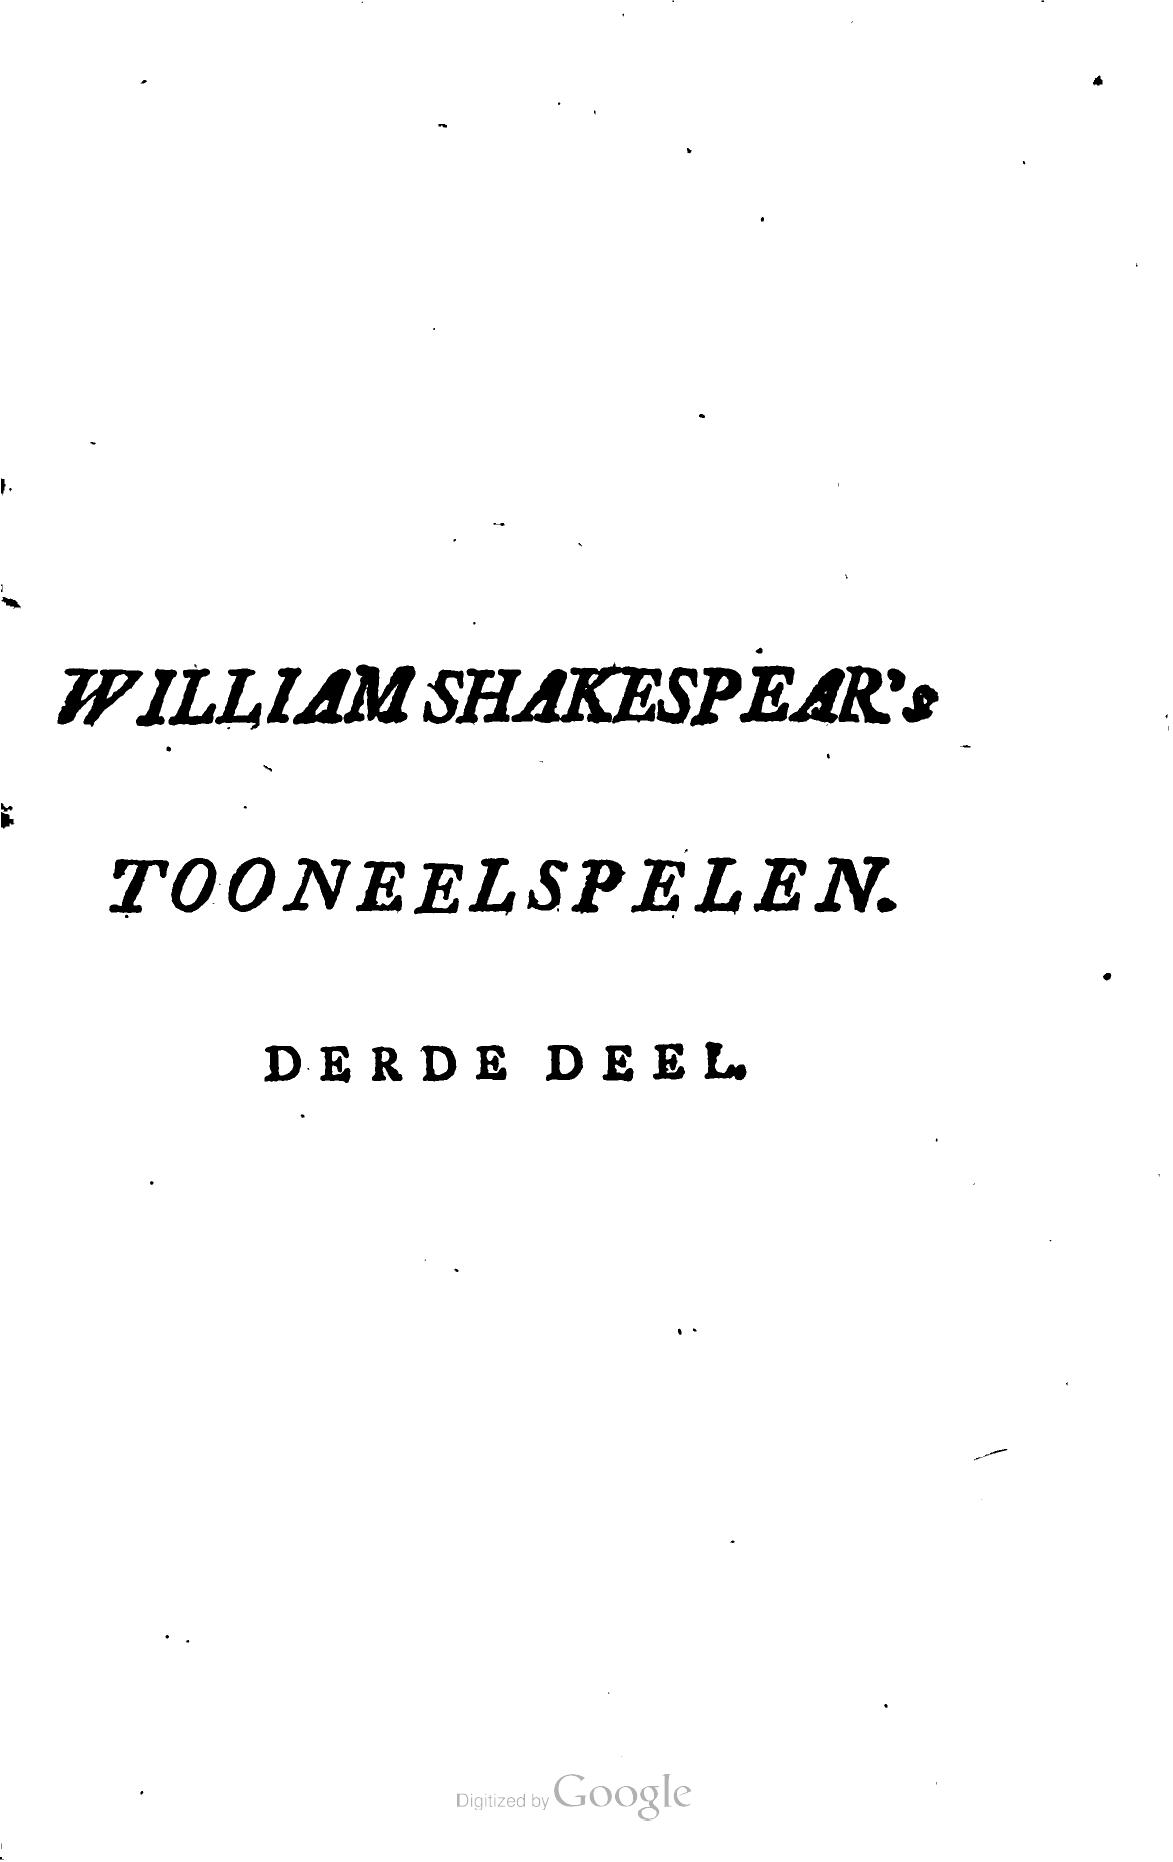 Shakespeare1781a01.jpg